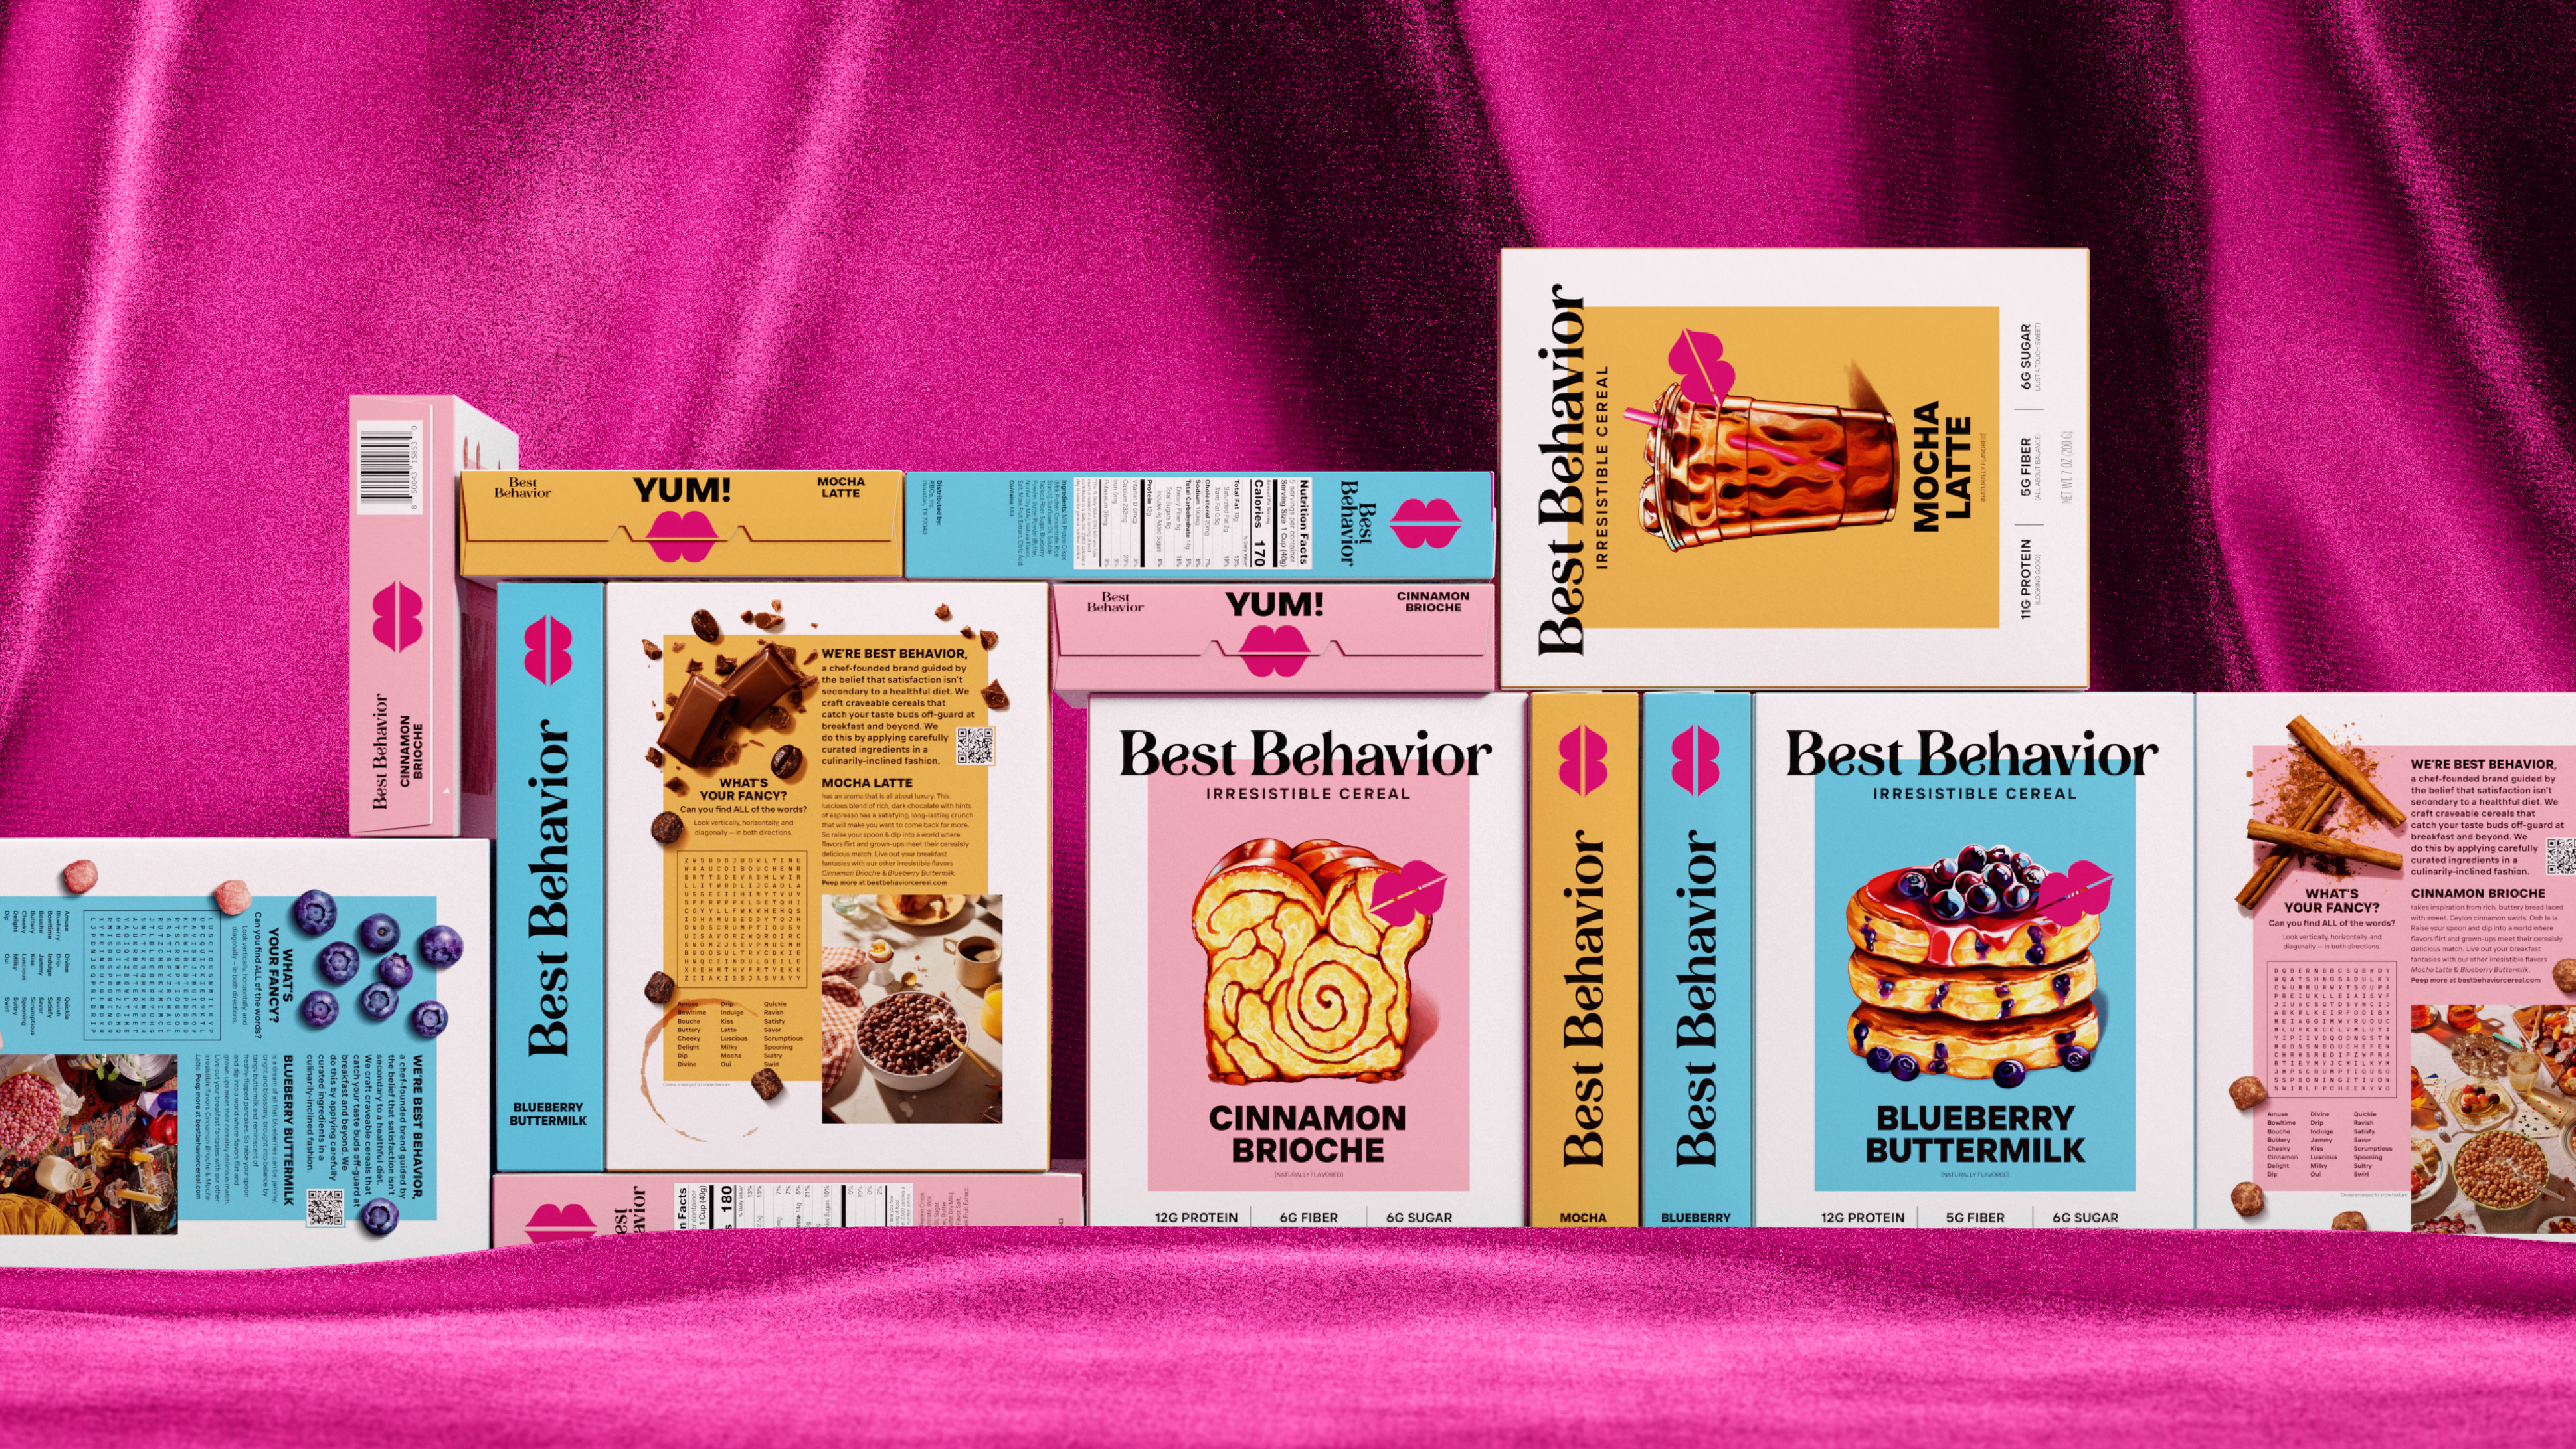 Best Behavior Leaves Behind the Nostalgic Sugar Rush For Refreshed Cereal Packaging